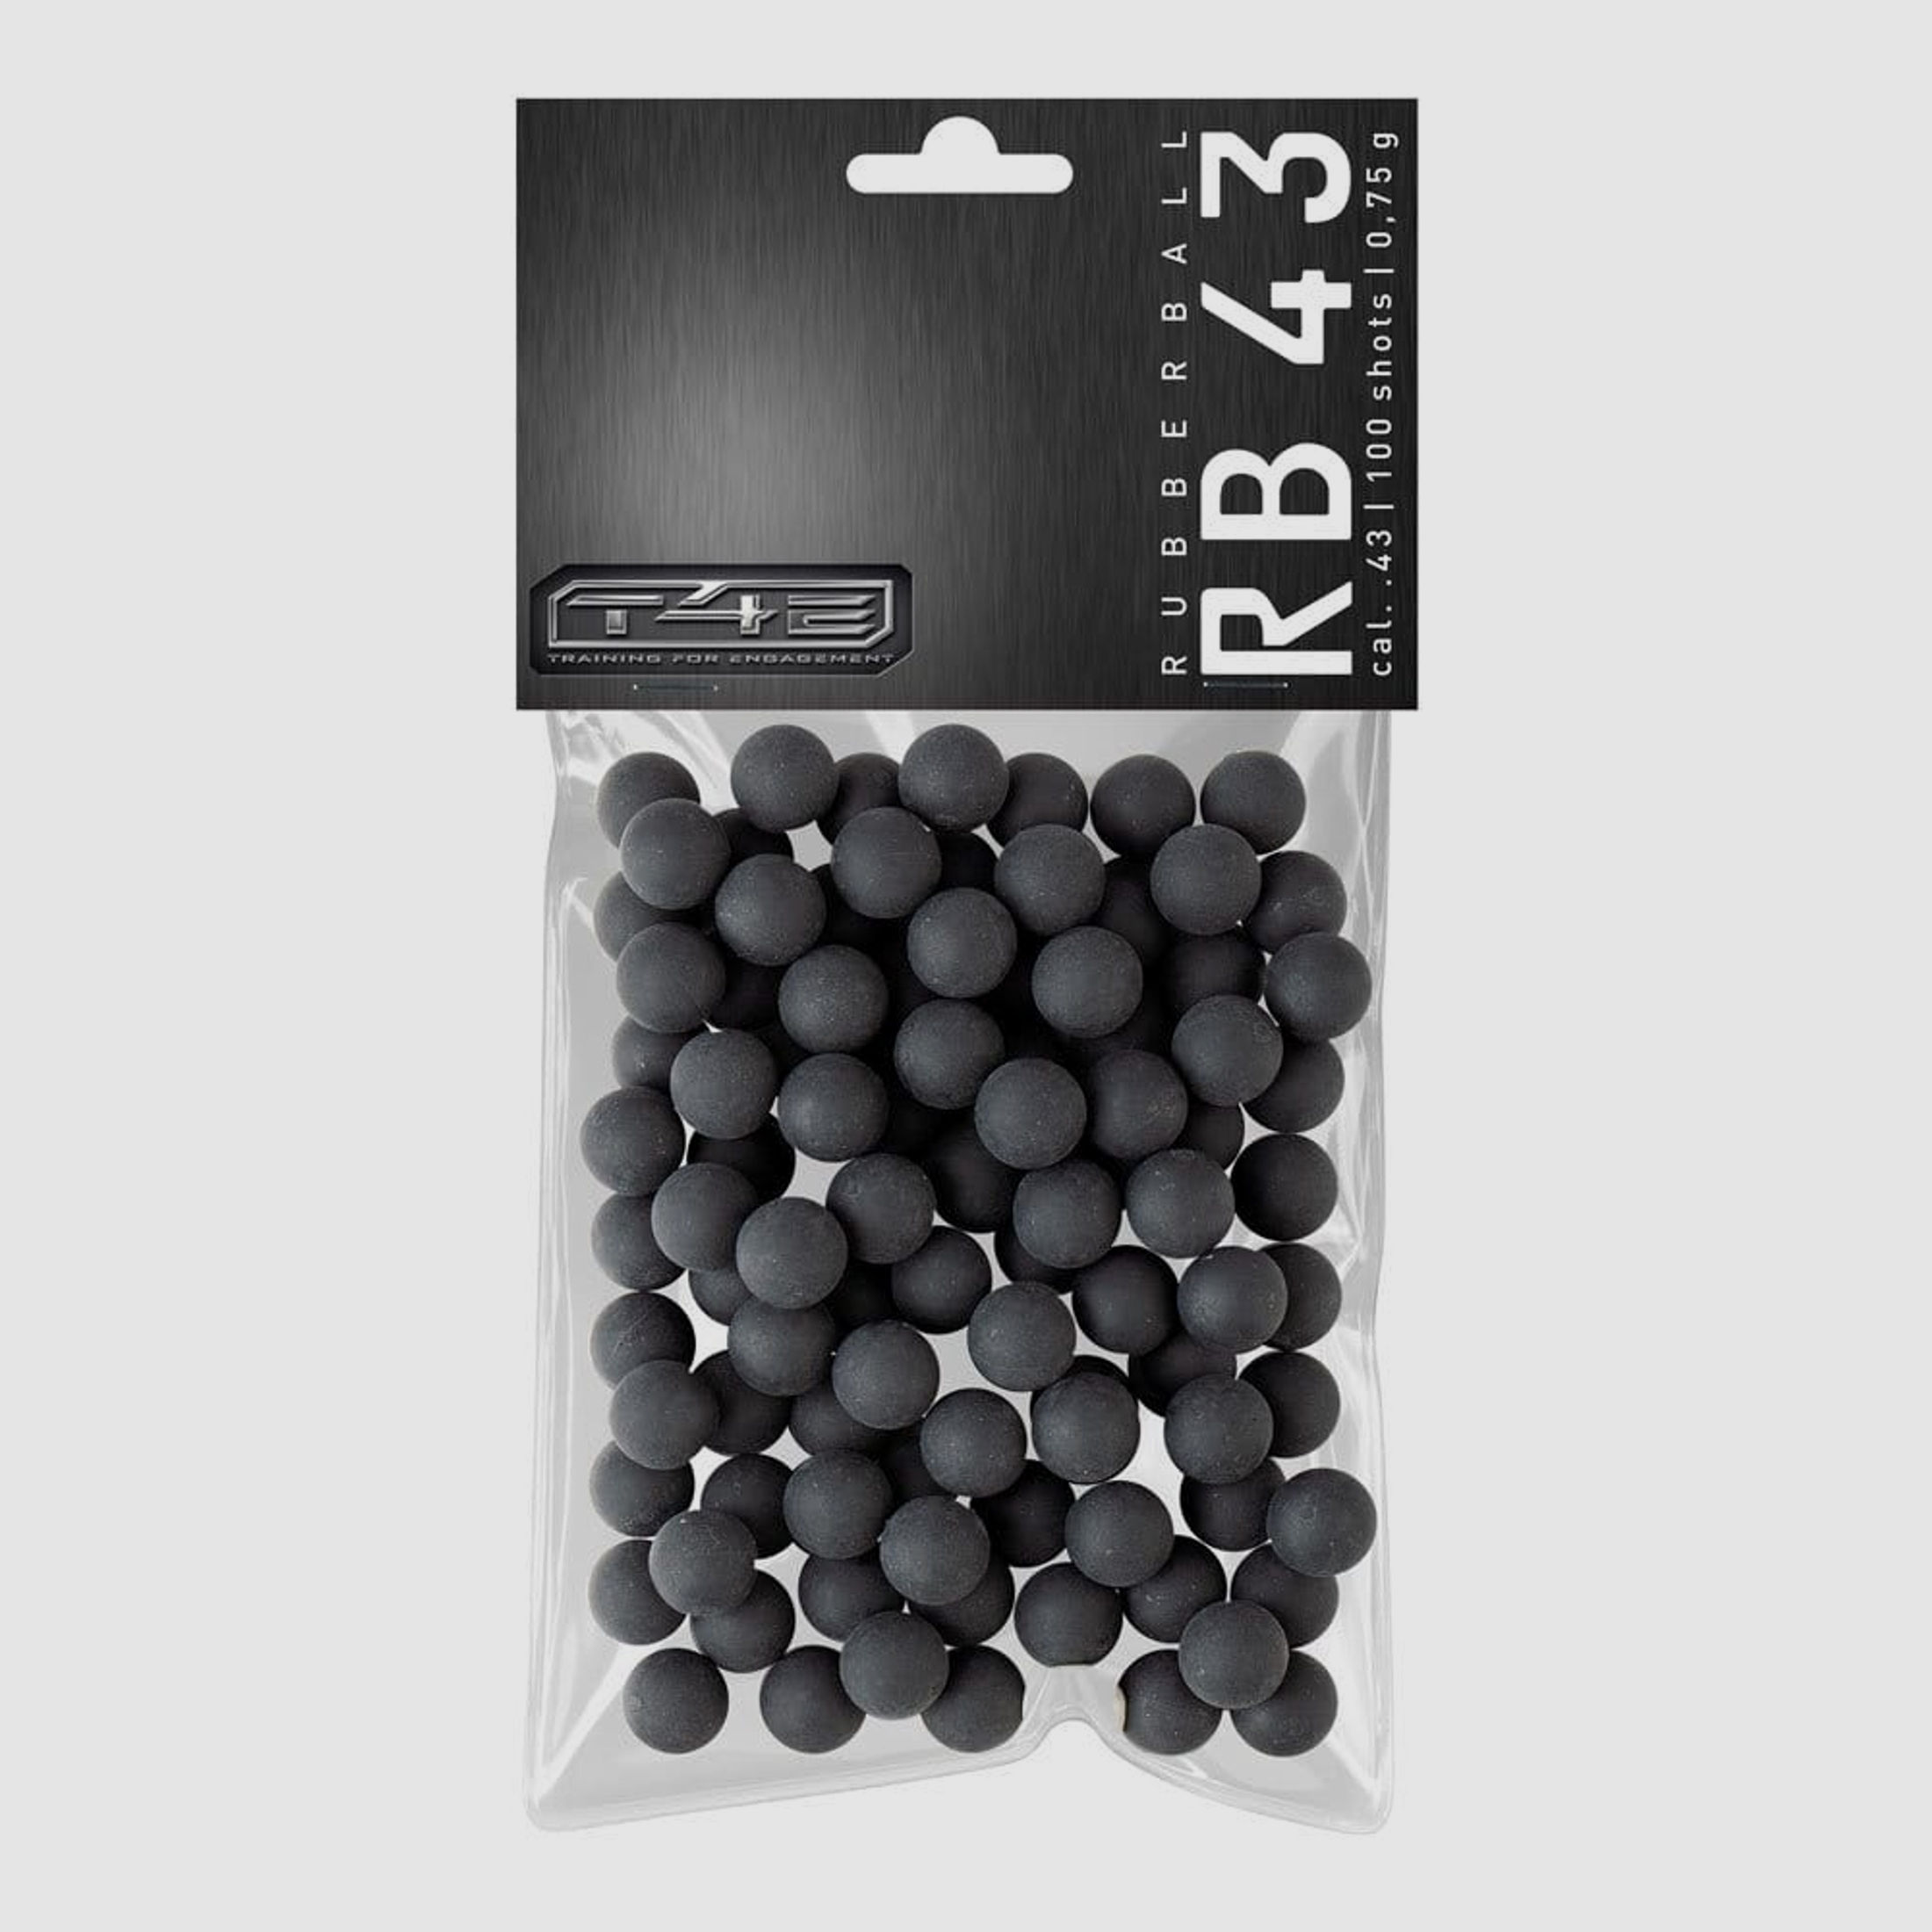 T4E RB 43 Prac Series Rubberballs - 100 Stk.